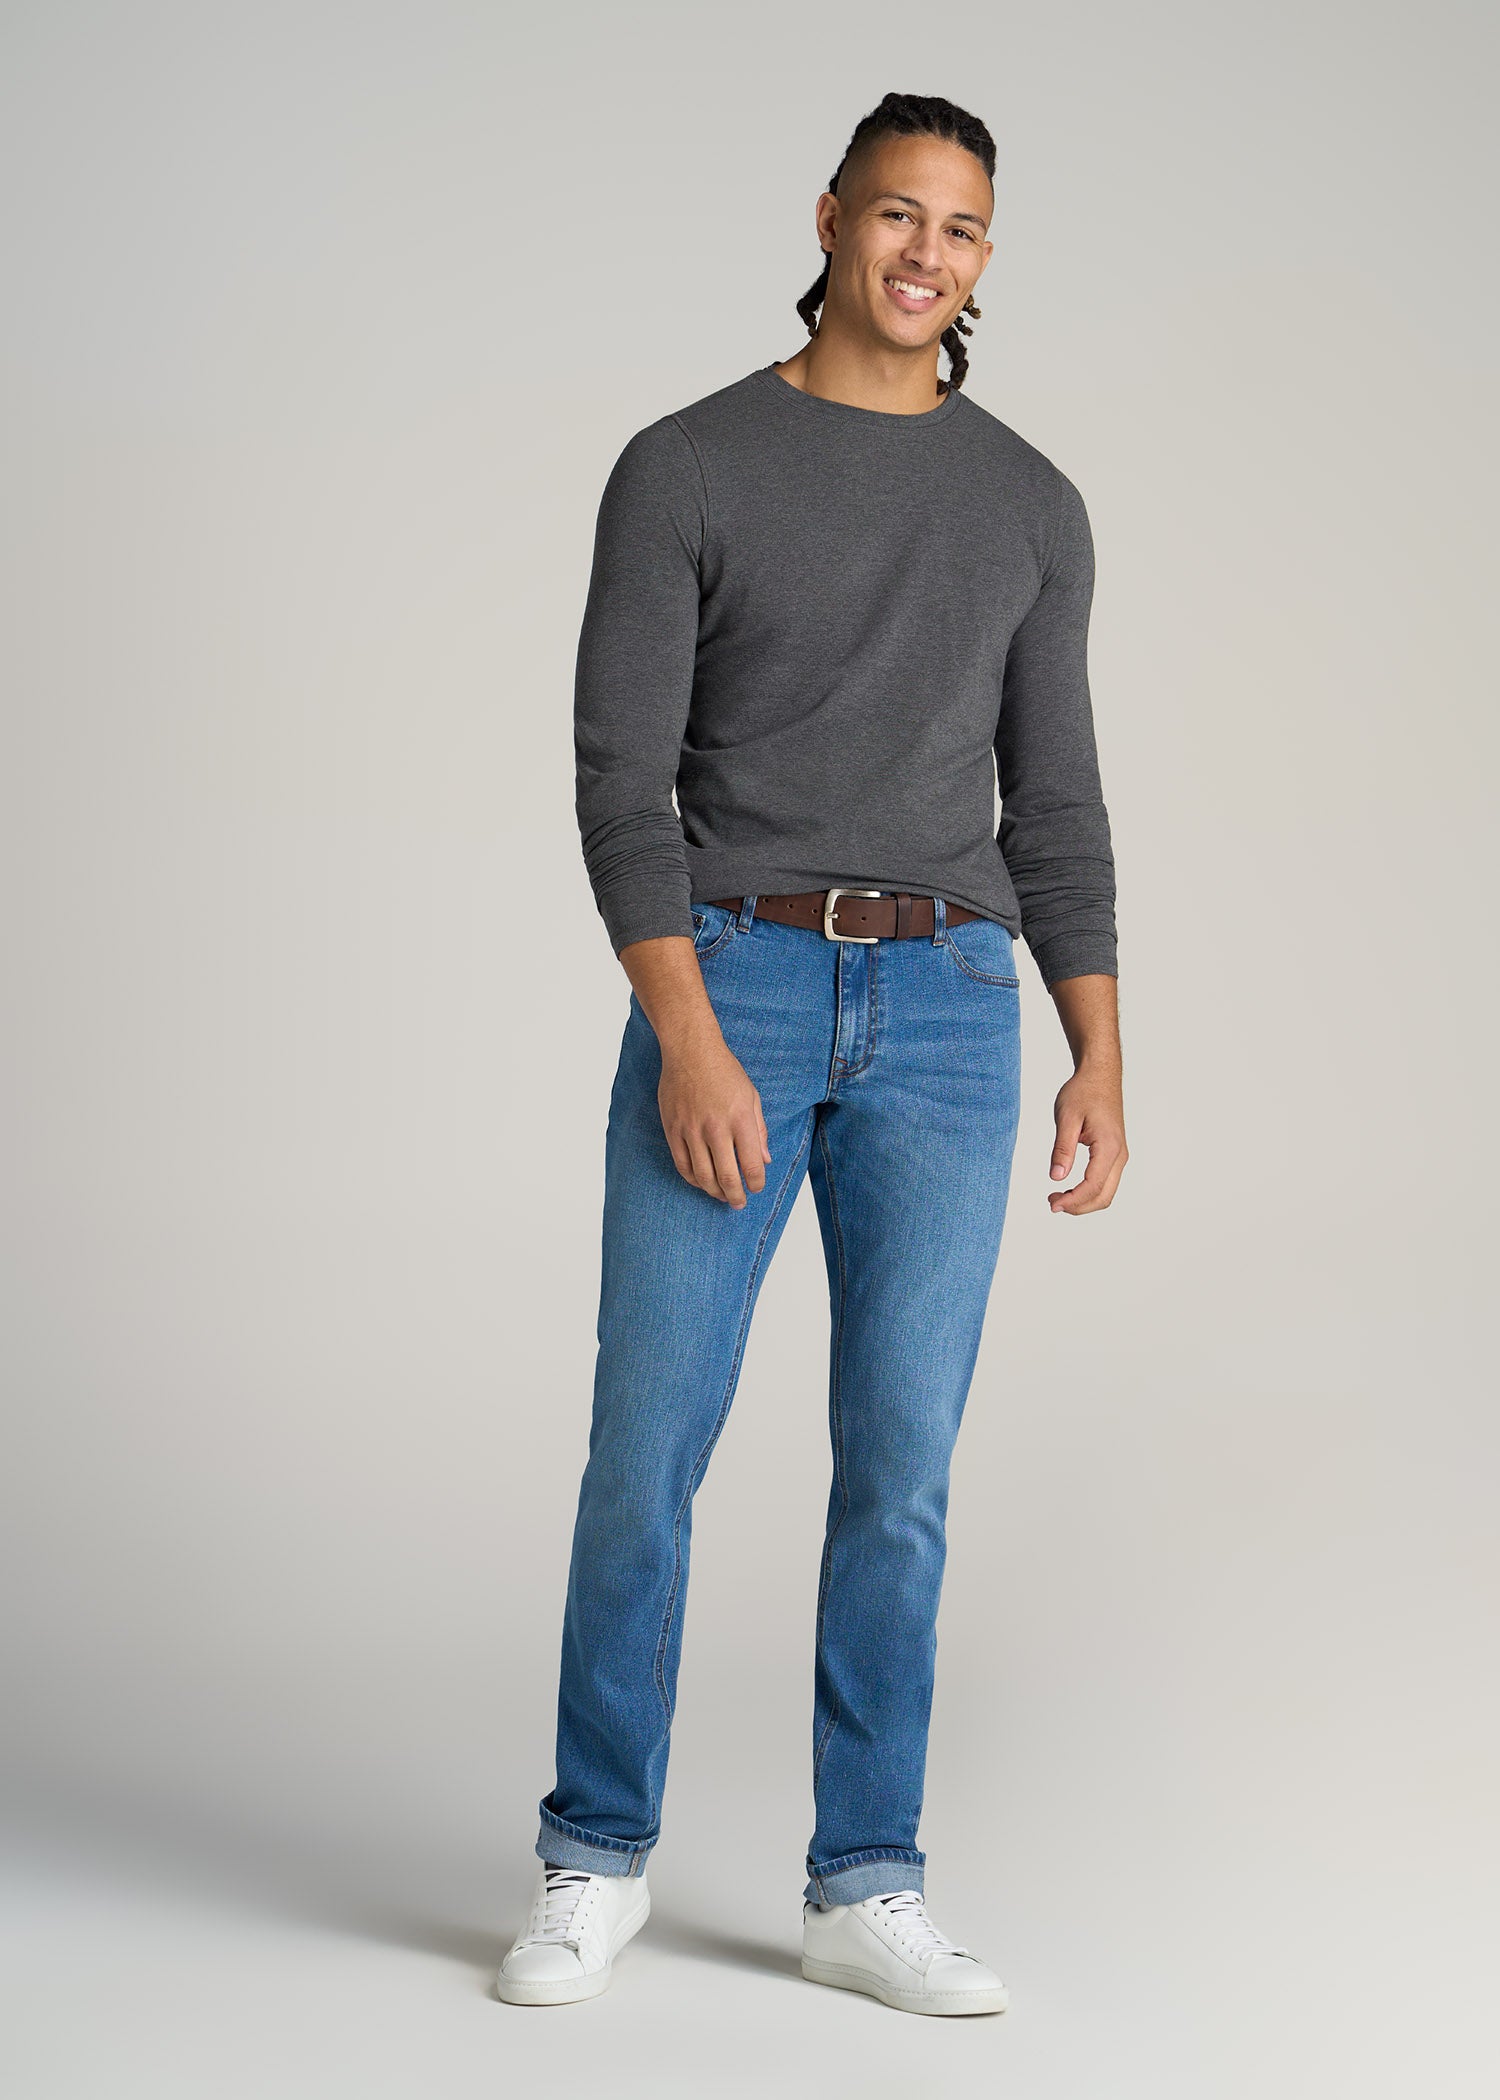 Original Essentials SLIM-FIT Long Sleeve Tall Men's T-Shirt in Charcoal Mix